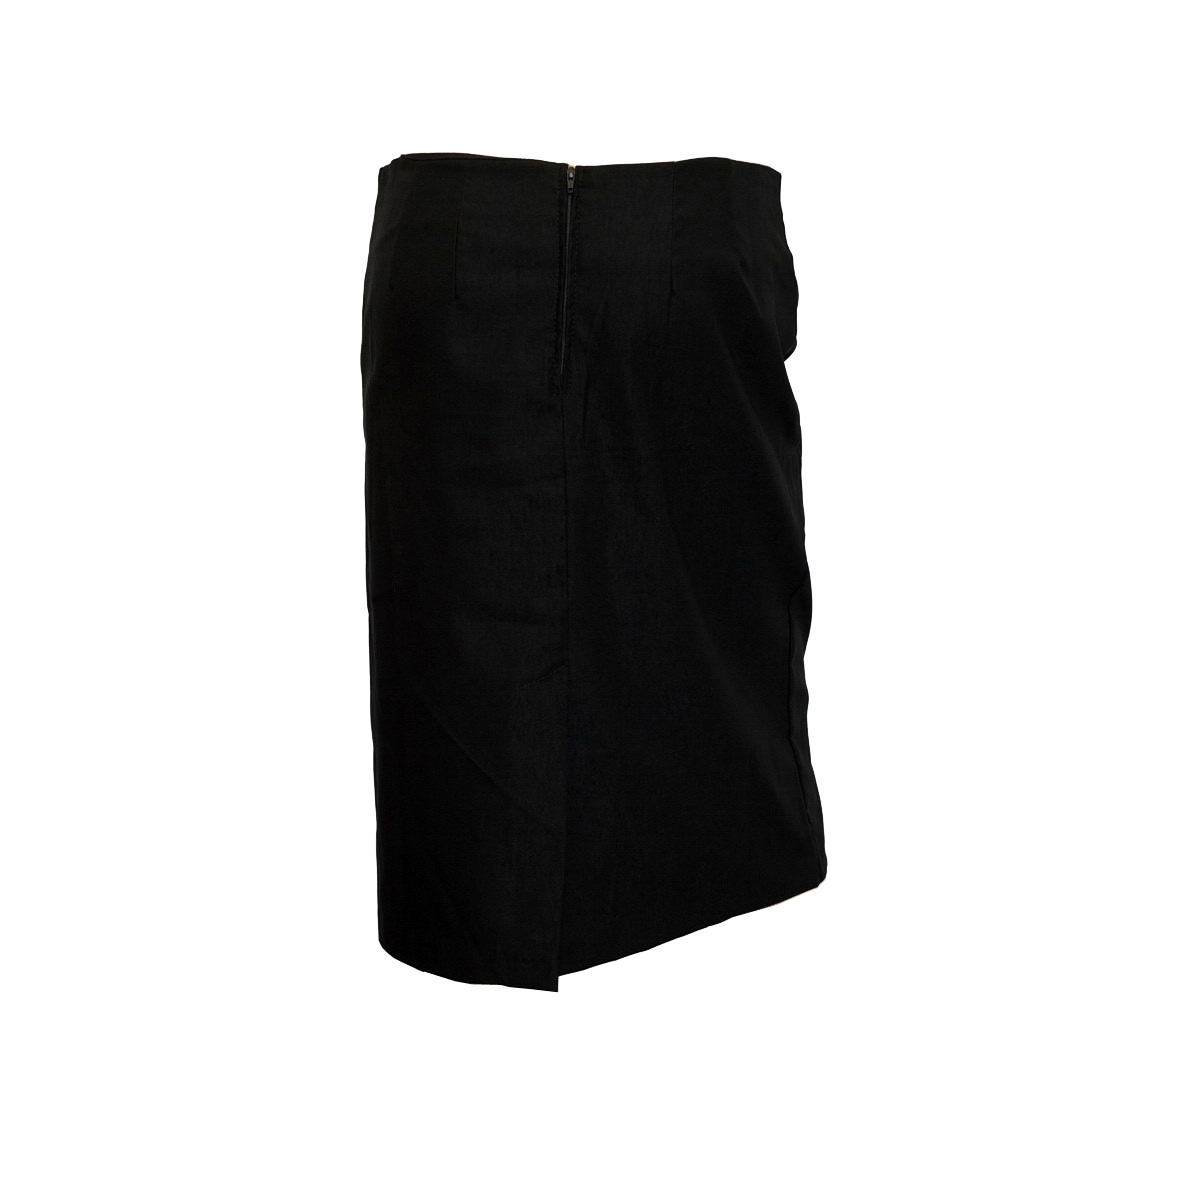 Plus Size Pencil Skirt Black | eVogues Apparel